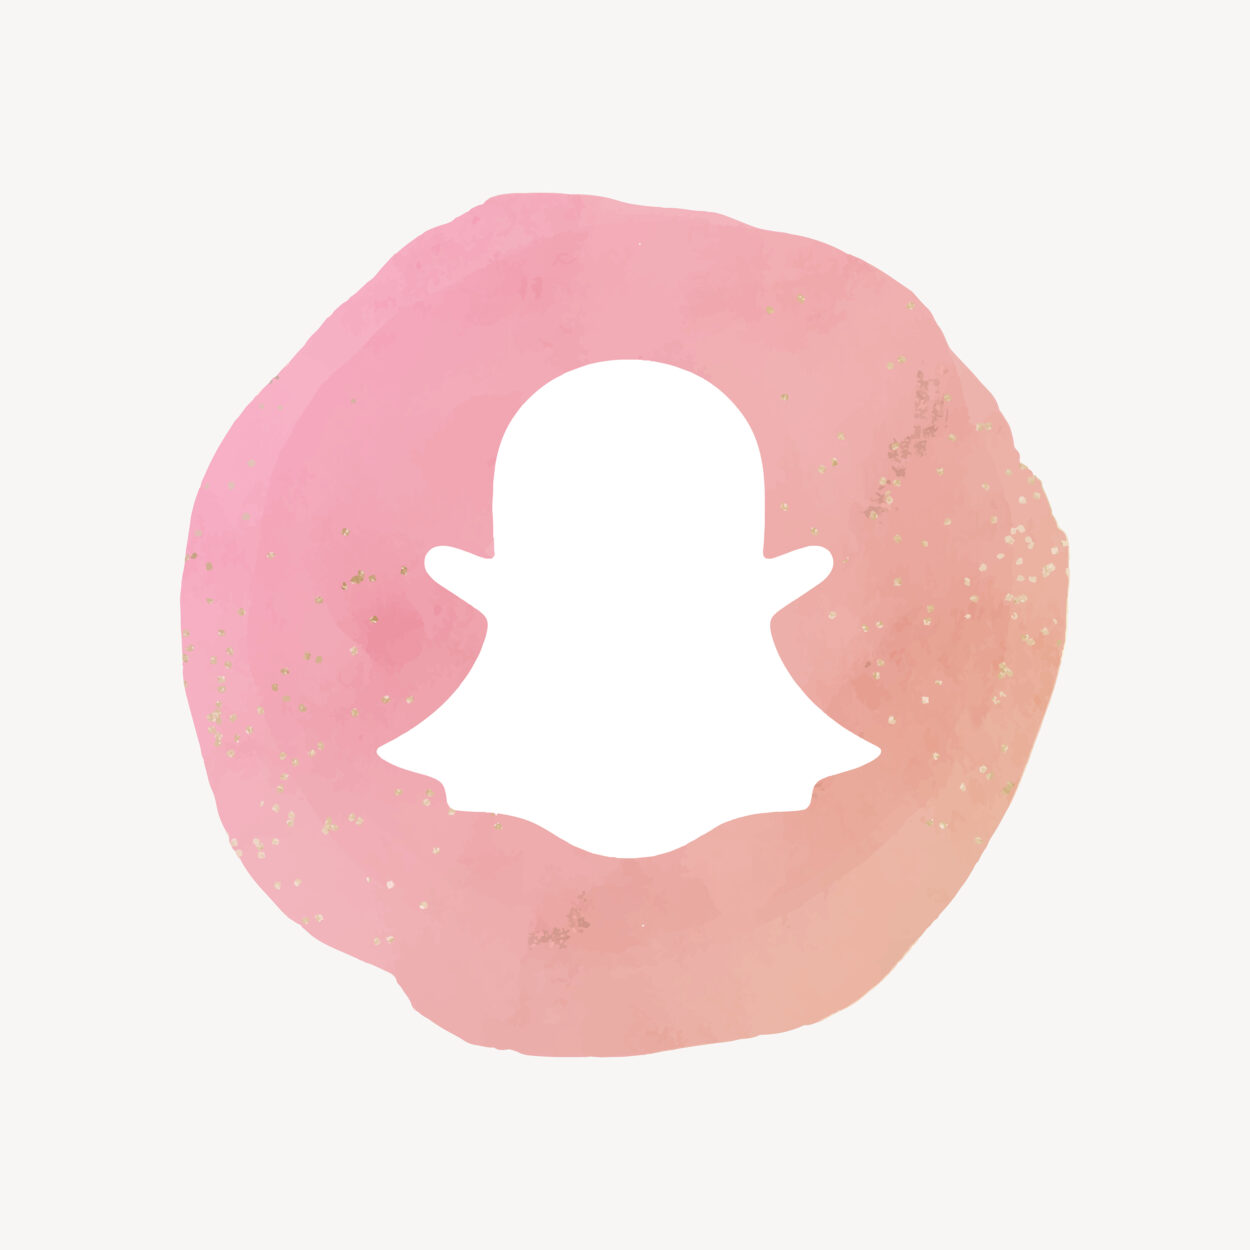 A pink Snapchat logo